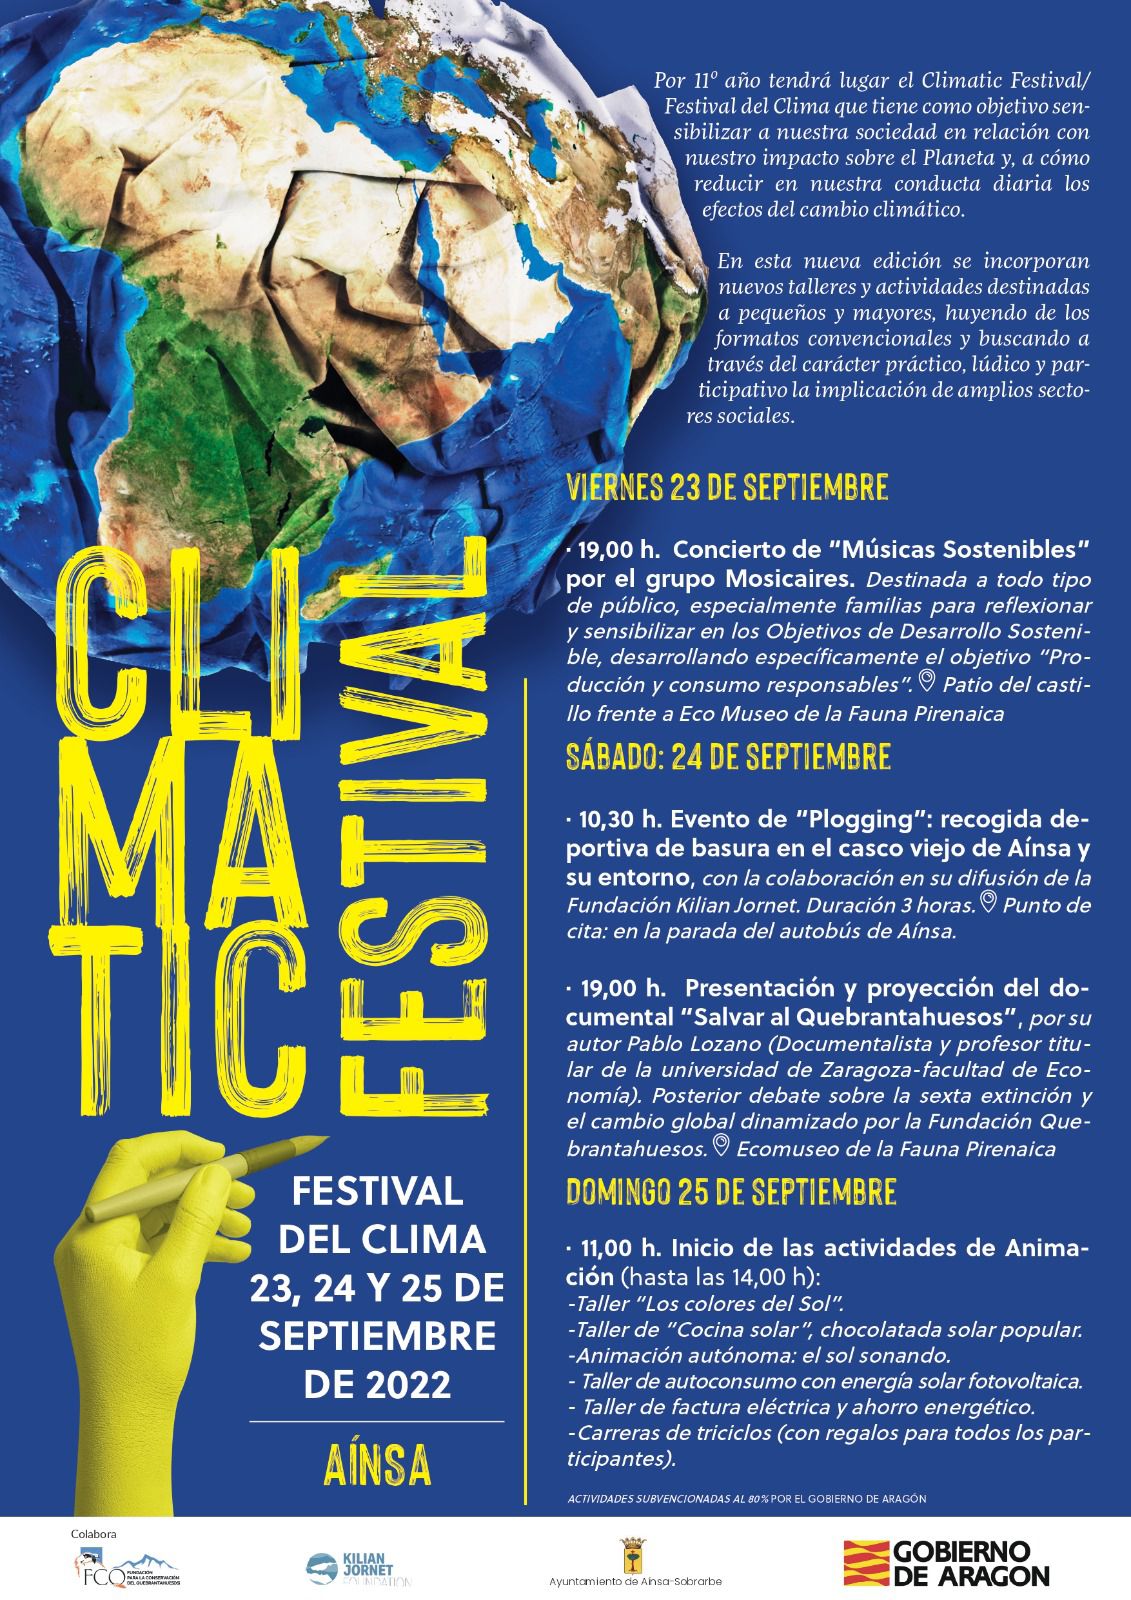 Climatic Festival. Festival del Clima, Aínsa septiembre 2022 septiembre 23 - septiembre 25